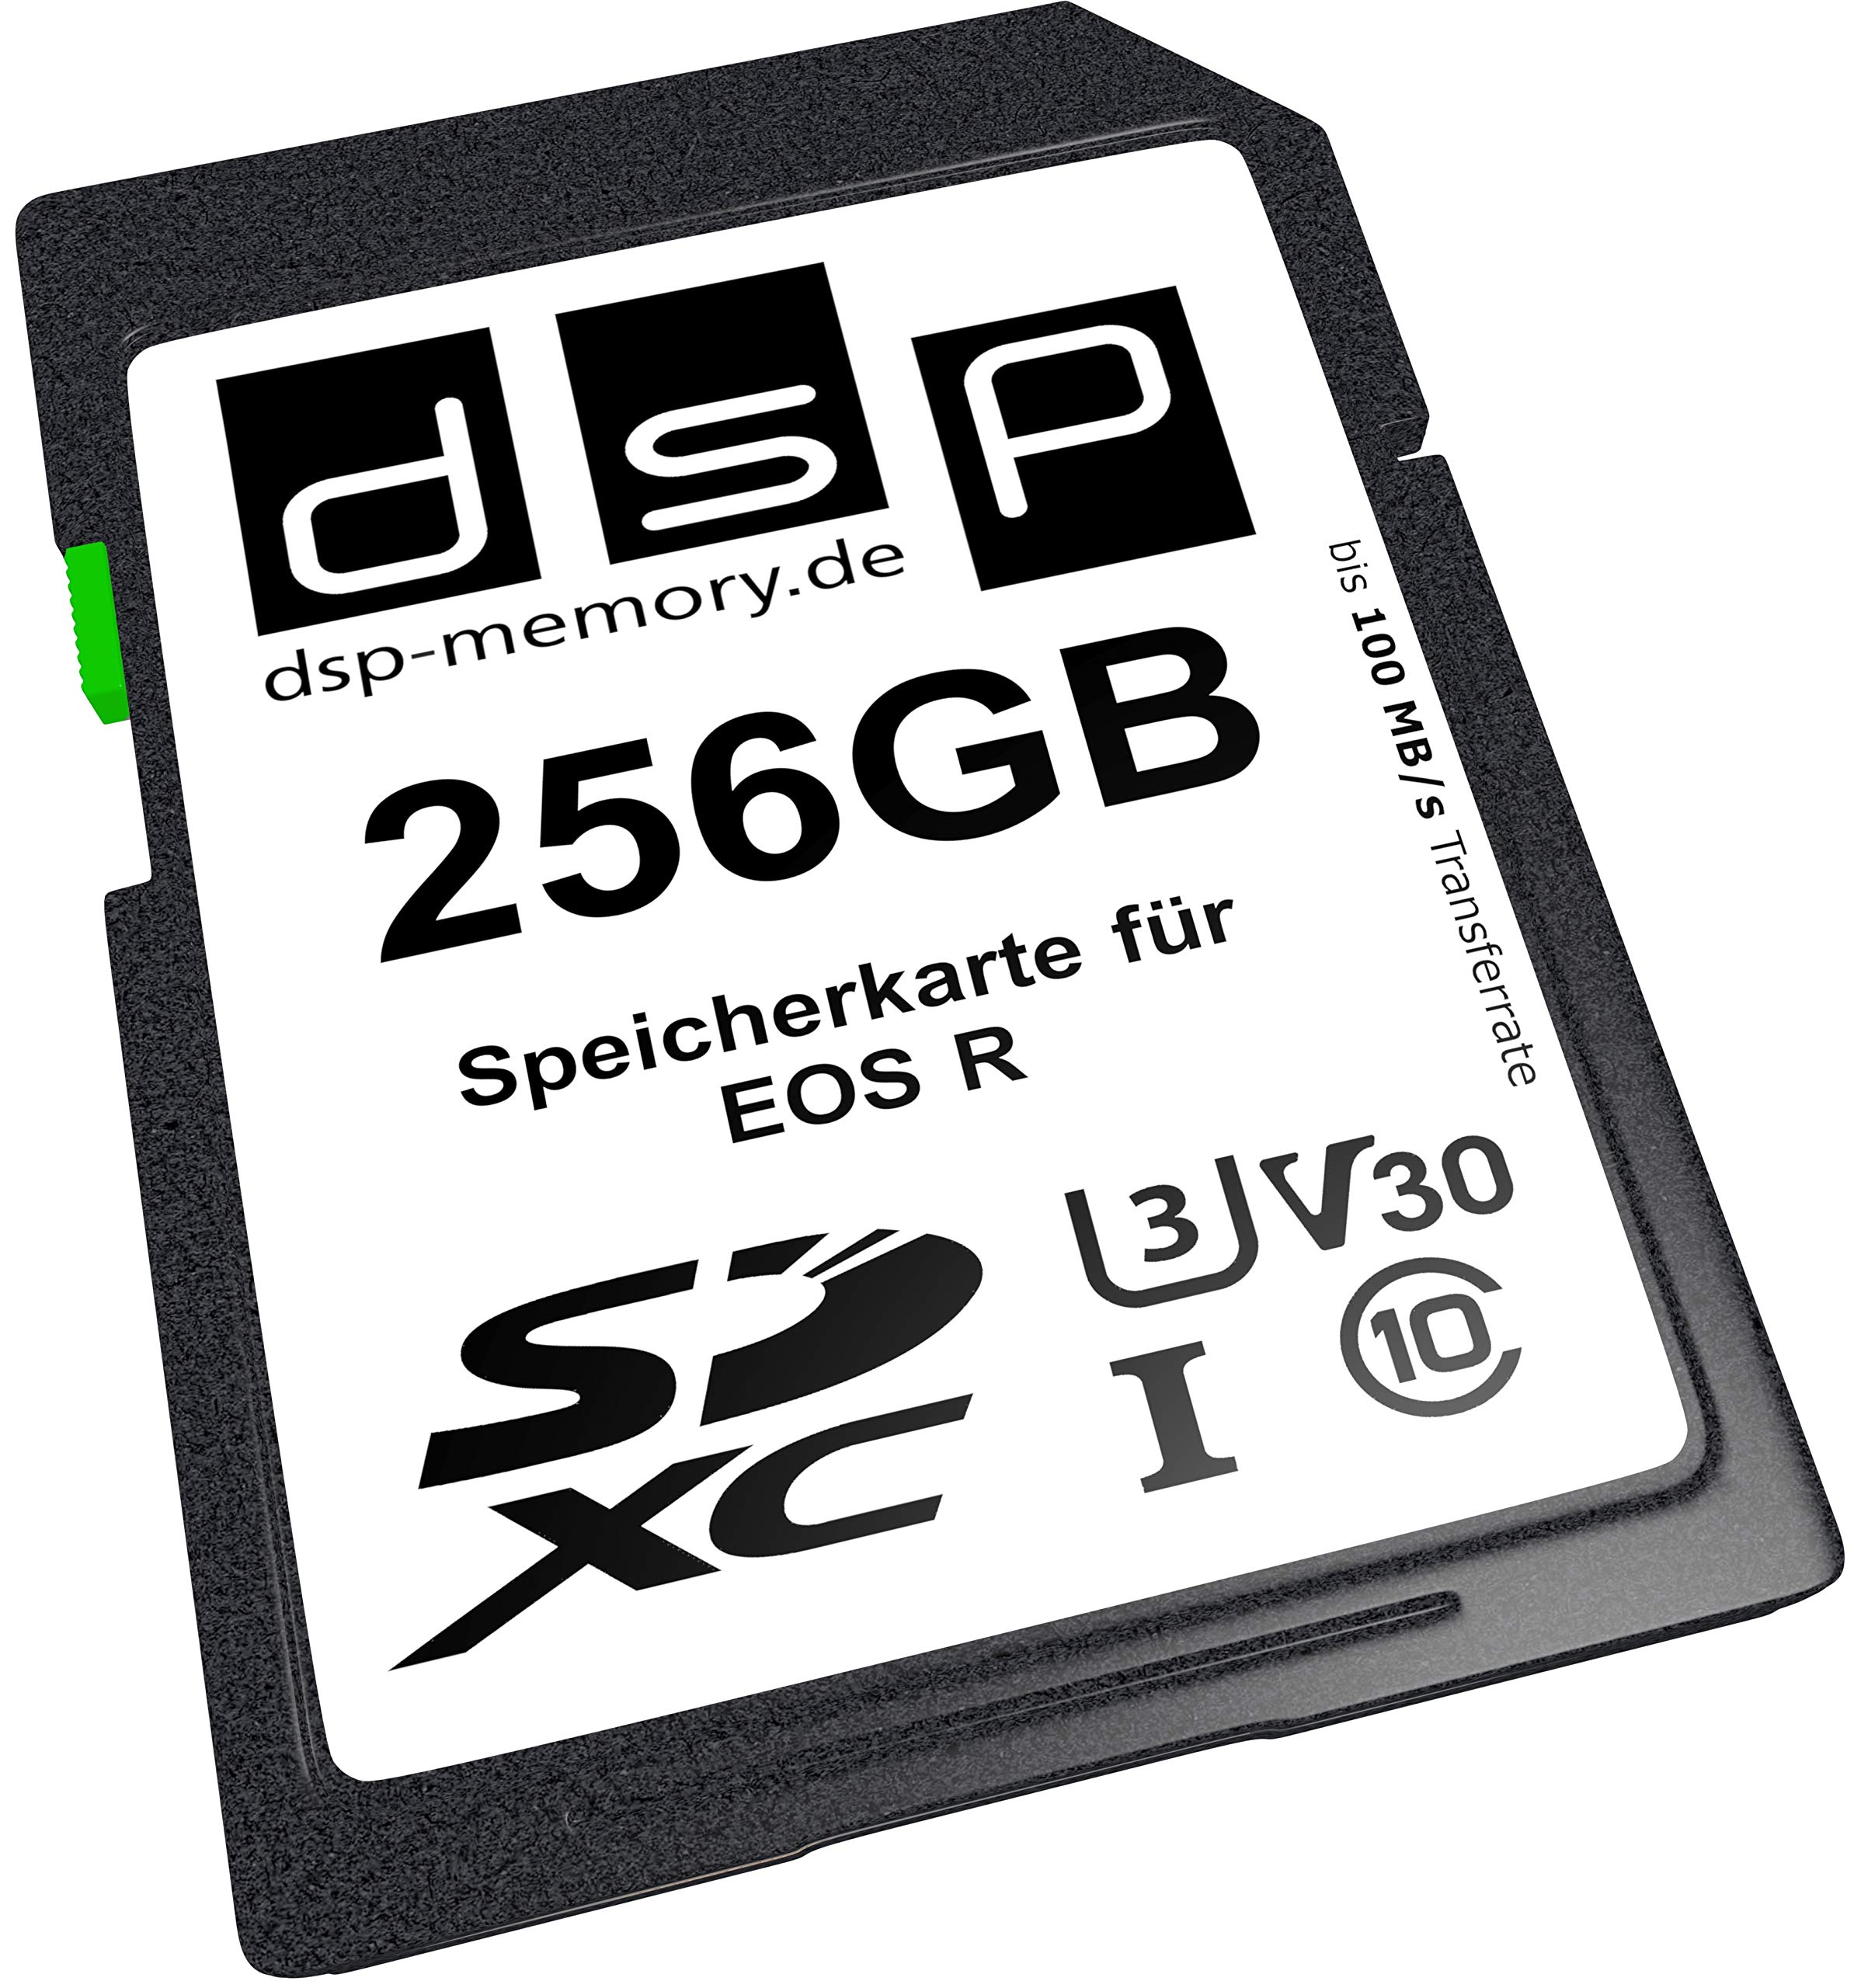 DSP Memory 256GB Professional V30 Speicherkarte für EOS R Digitalkamera